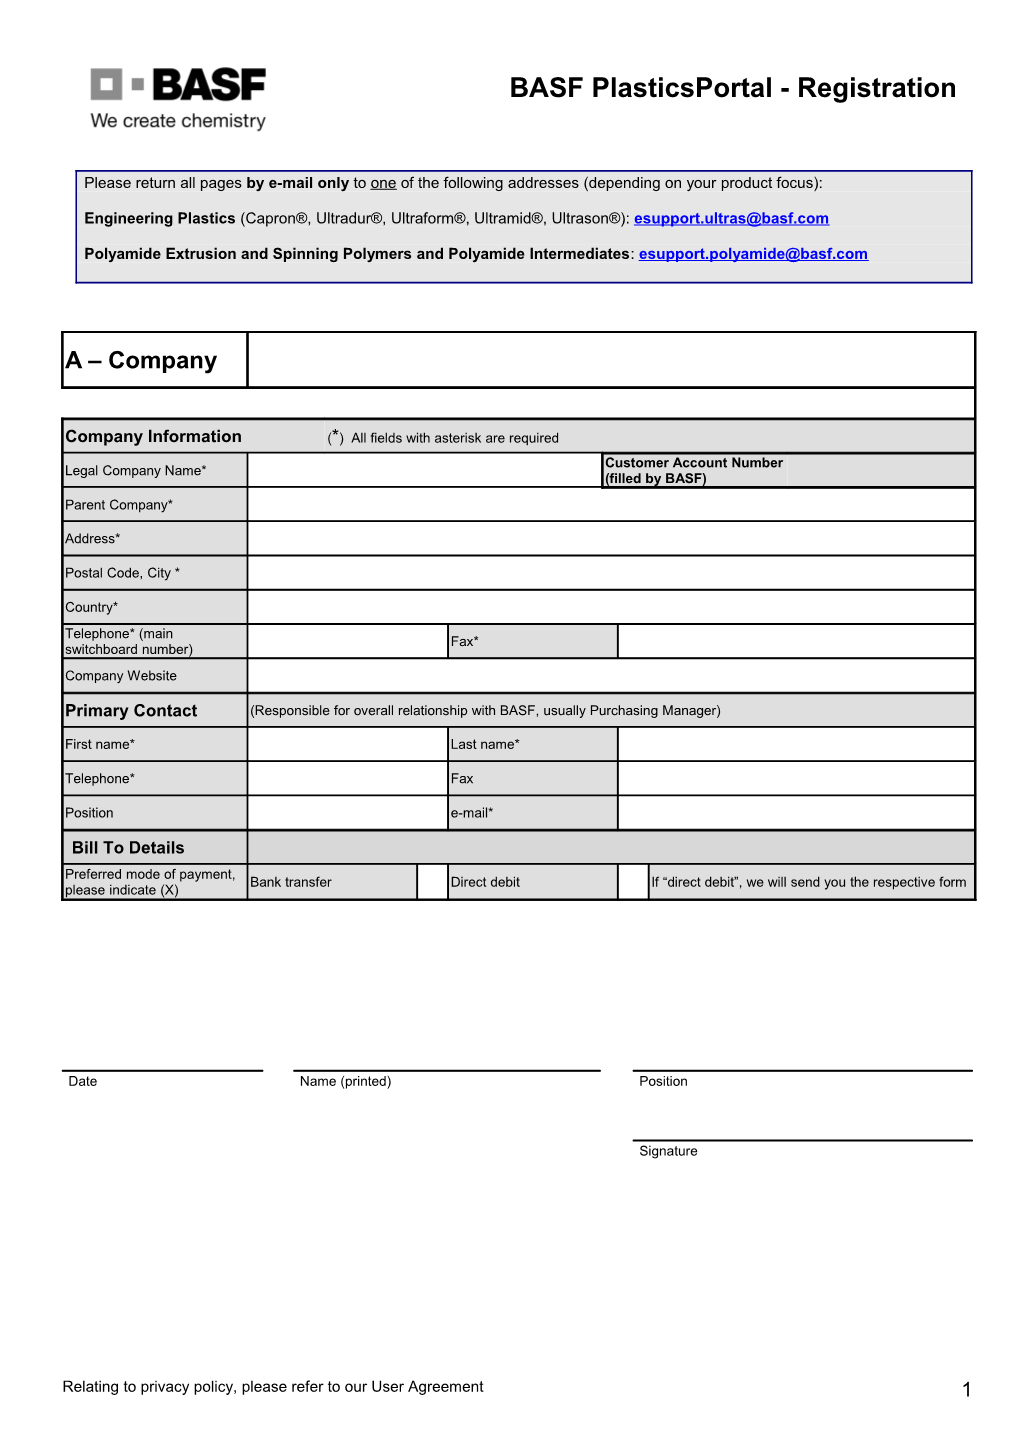 E-Commerce Registration Form for BASF Customers